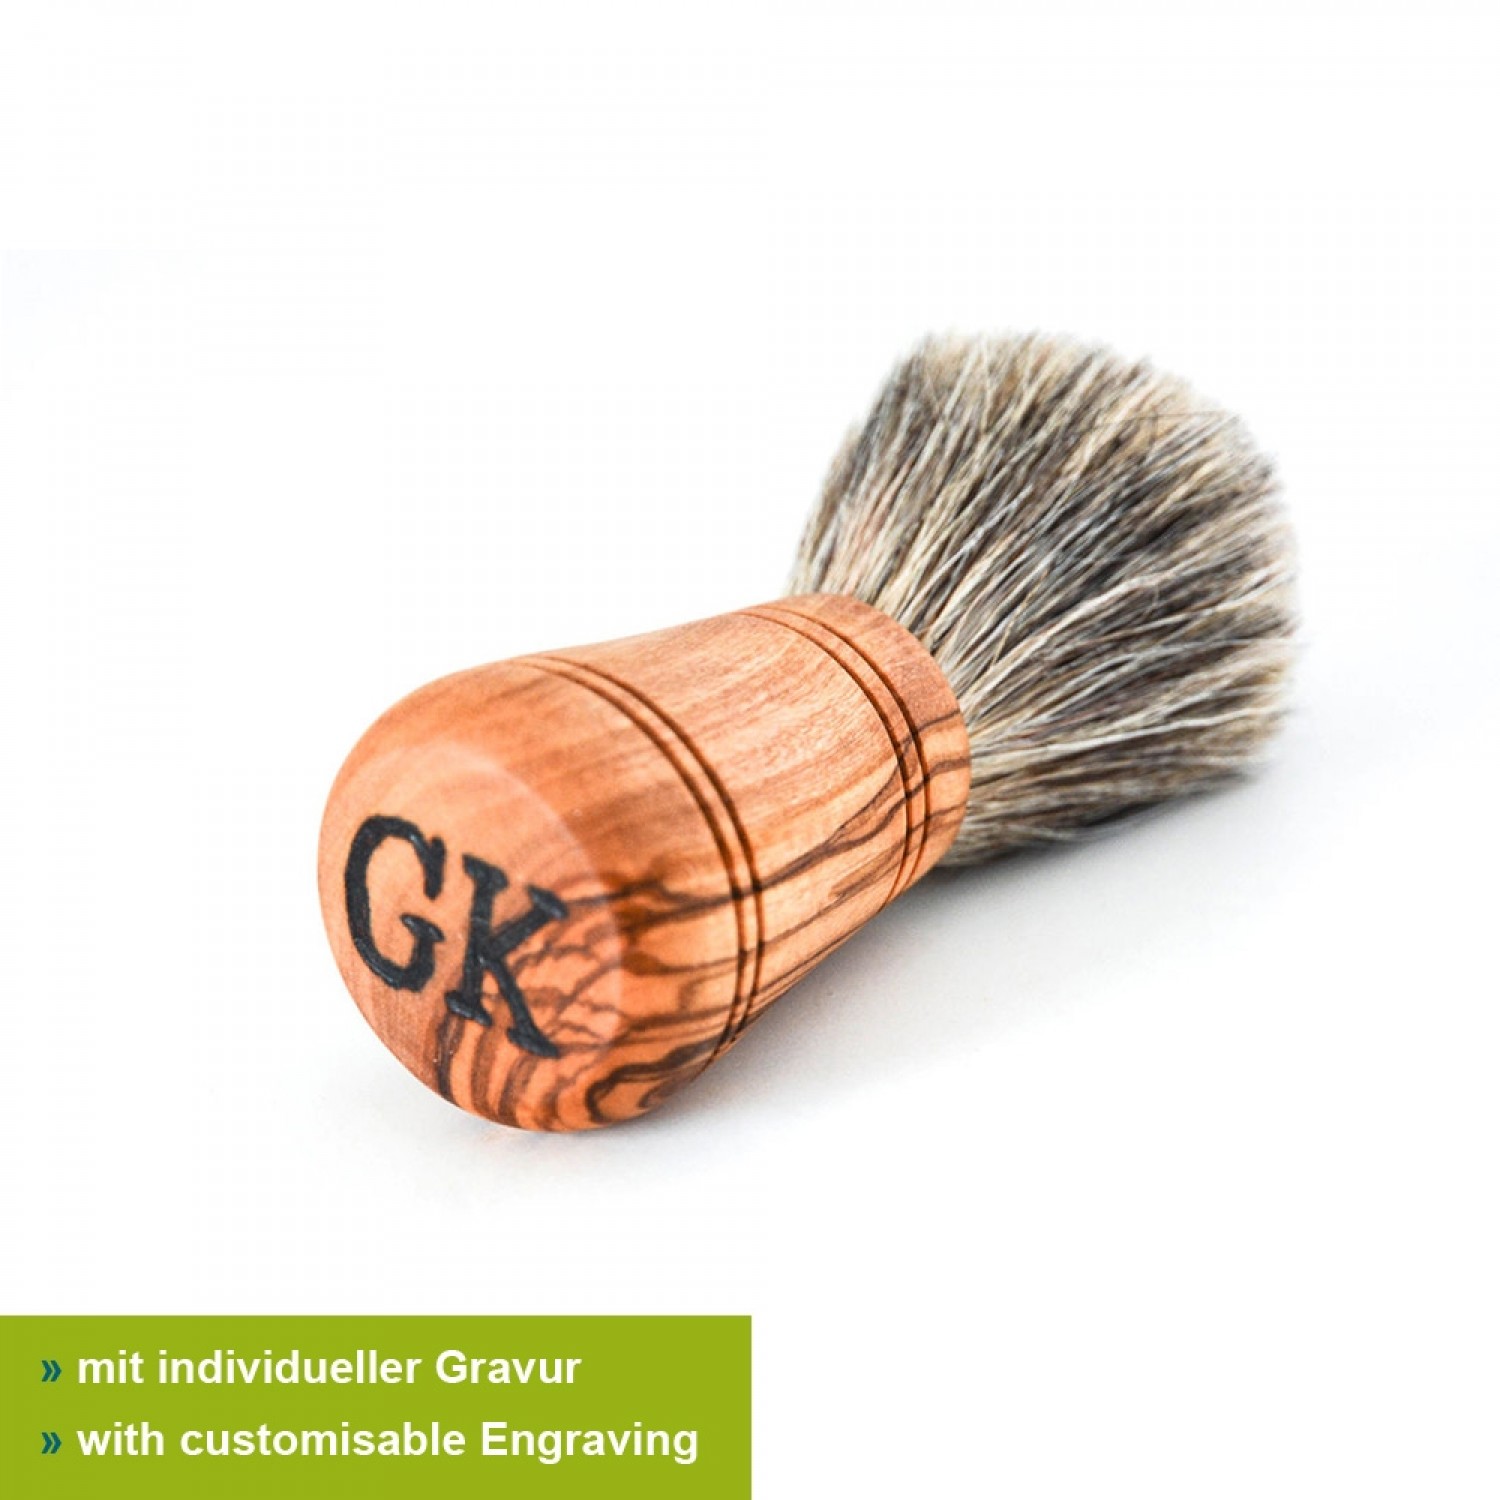 Shaving Brush Sir George Olive Wood Handle & Engraving » D.O.M.